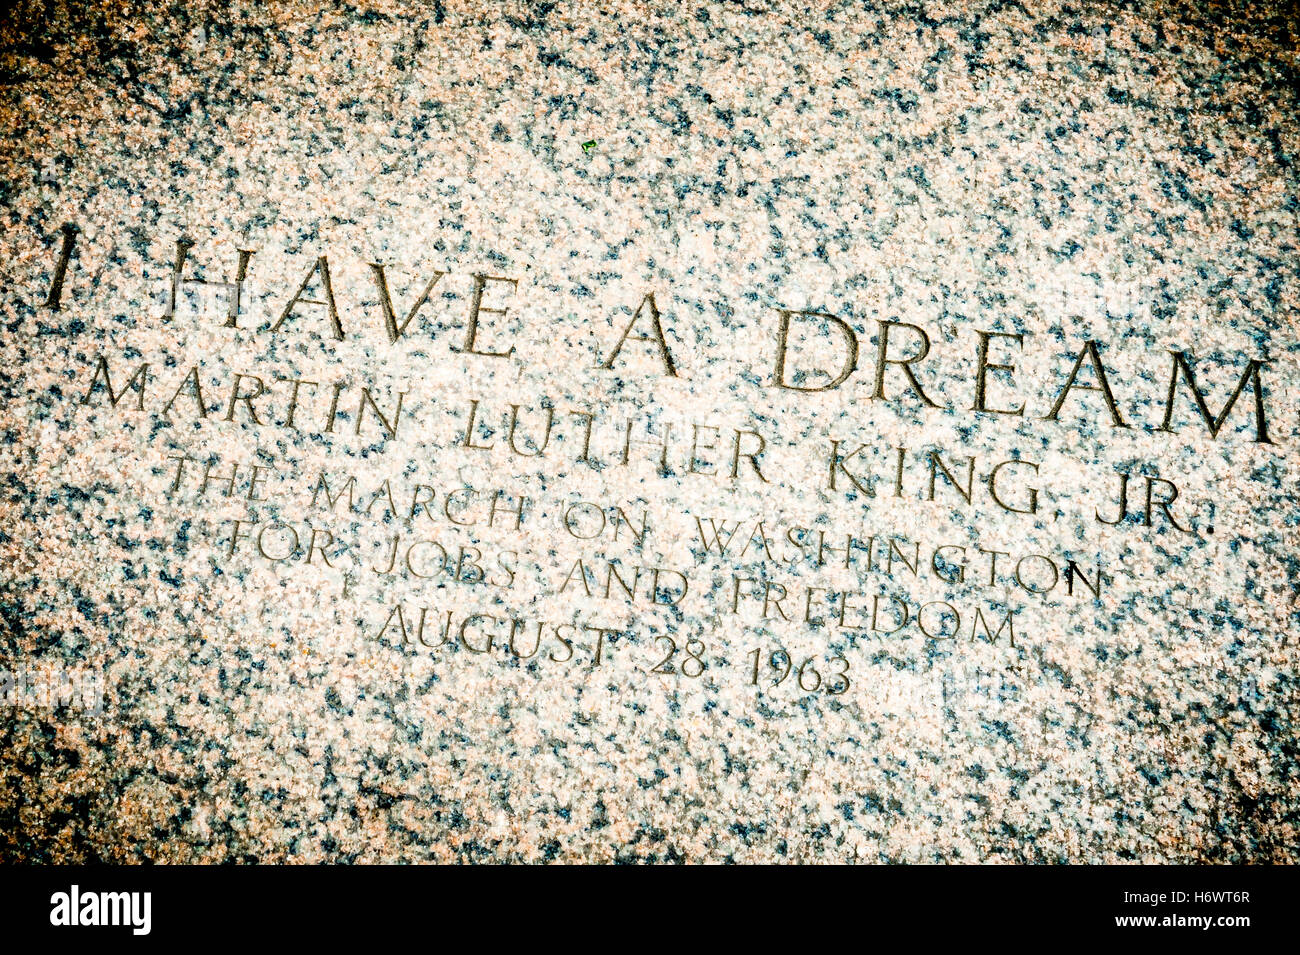 WASHINGTON DC - 30. Juli 2014: "I Have a Dream"-Zitat auf den Stufen des Lincoln Memorial Erinnerung an Martin Luther King Jr. Stockfoto